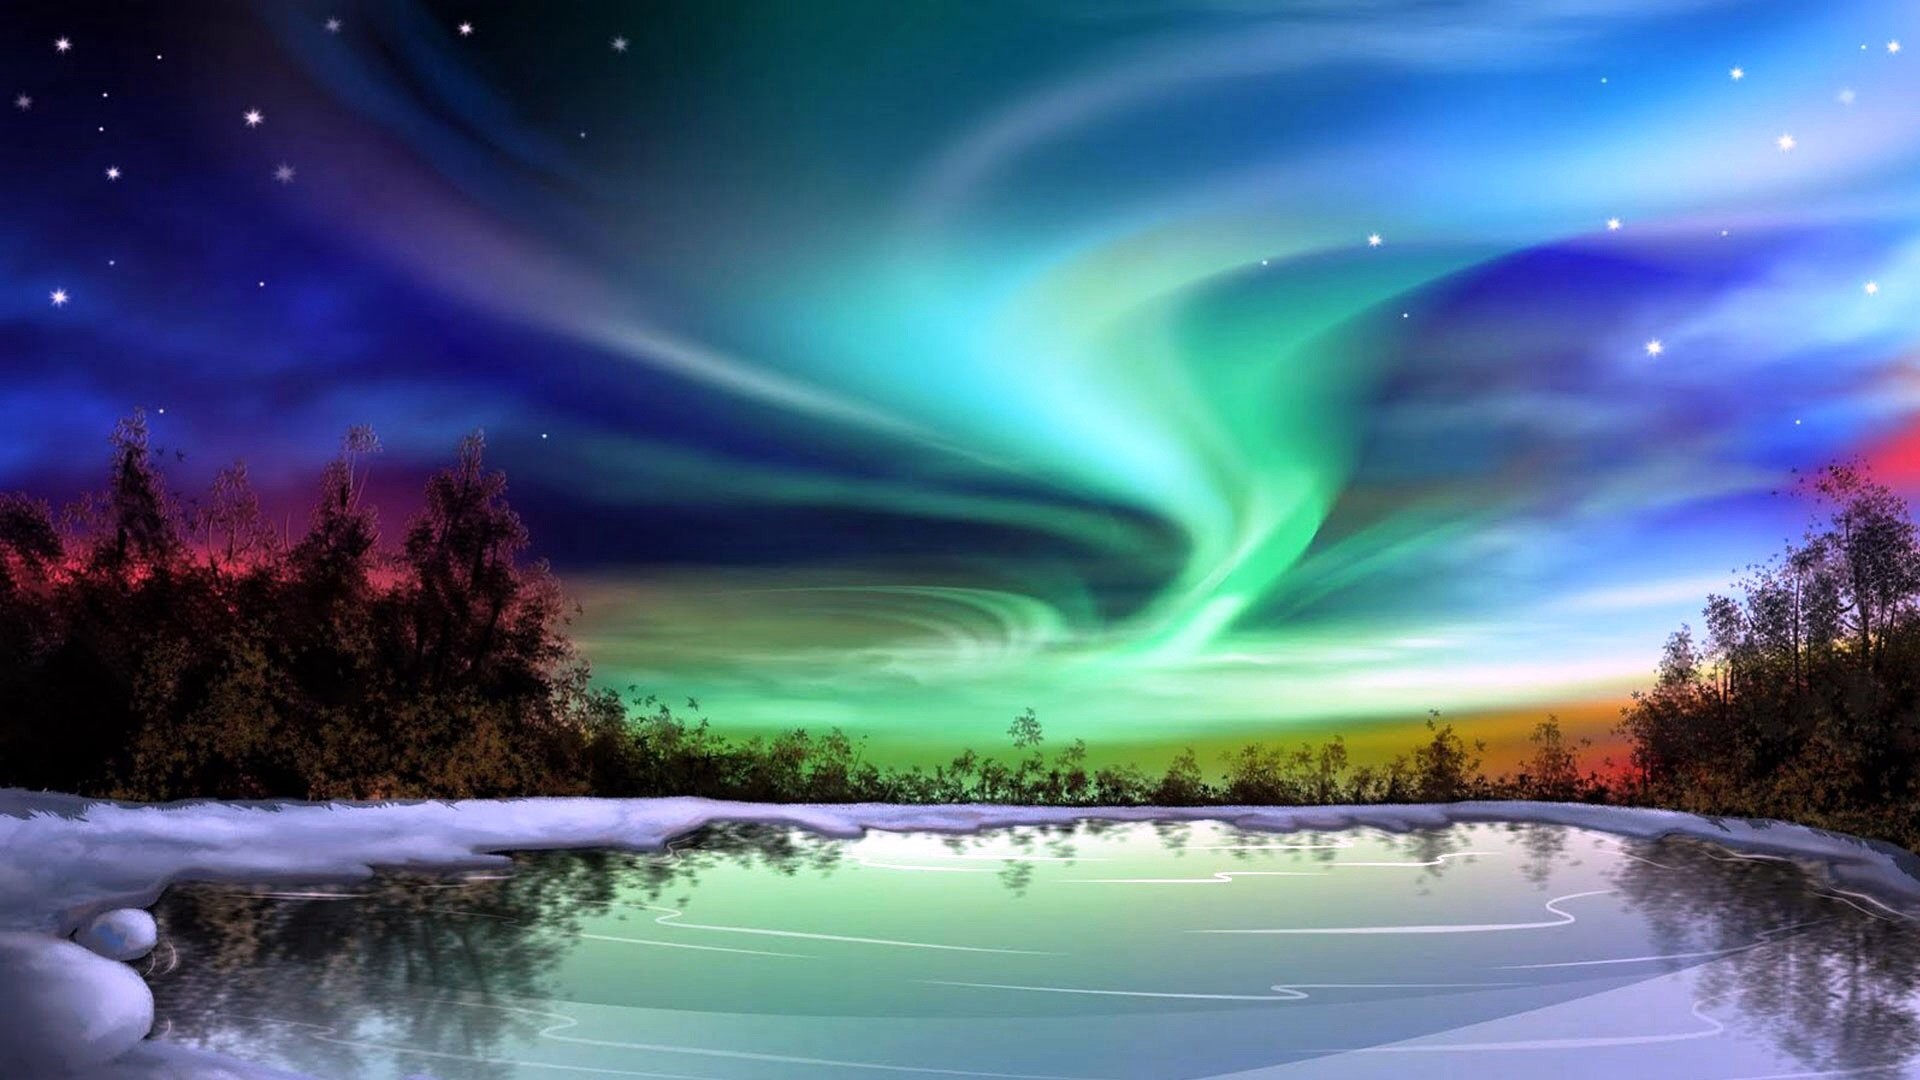 1920x1080 Aurora borealis images Northern lights aurora borealis 39533089 1920 1080  HD wallpaper and background photos